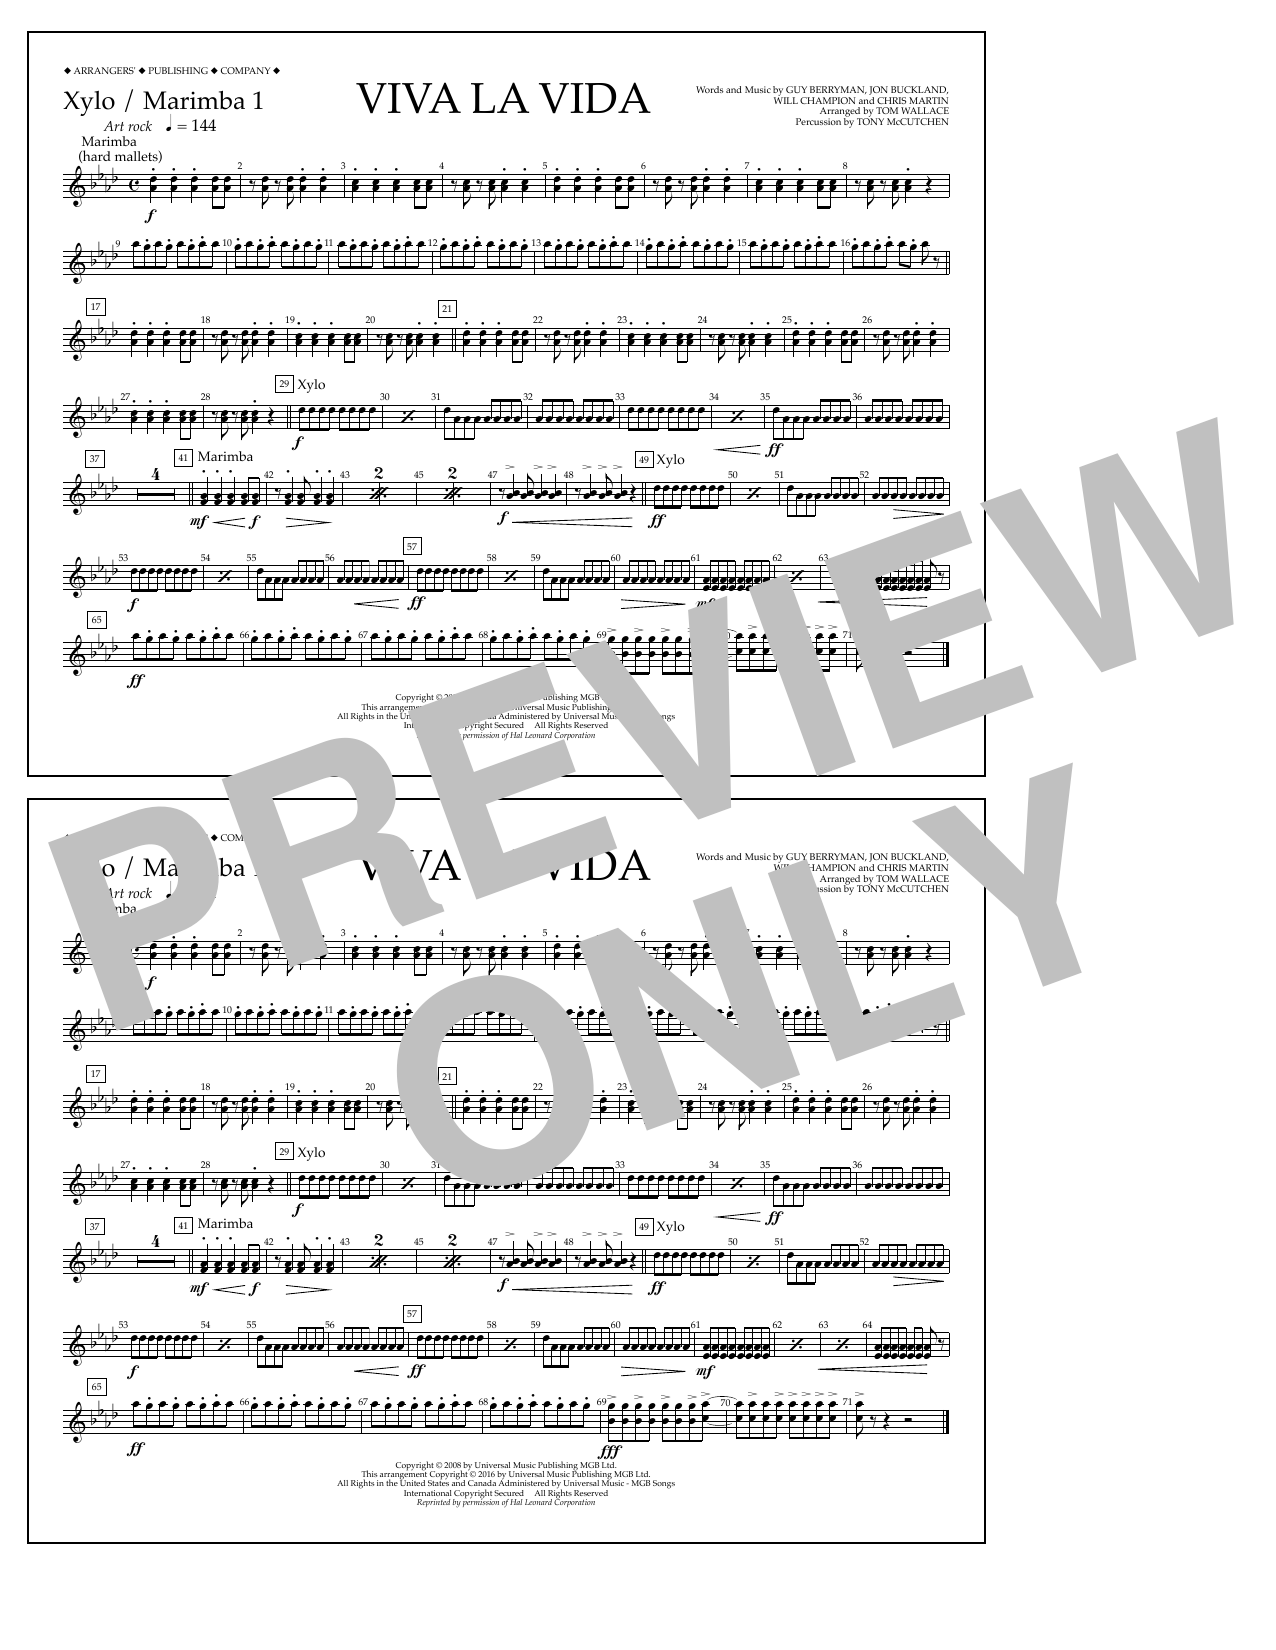 Tom Wallace Viva La Vida - Xylo./Marimba 1 Sheet Music Notes & Chords for Marching Band - Download or Print PDF